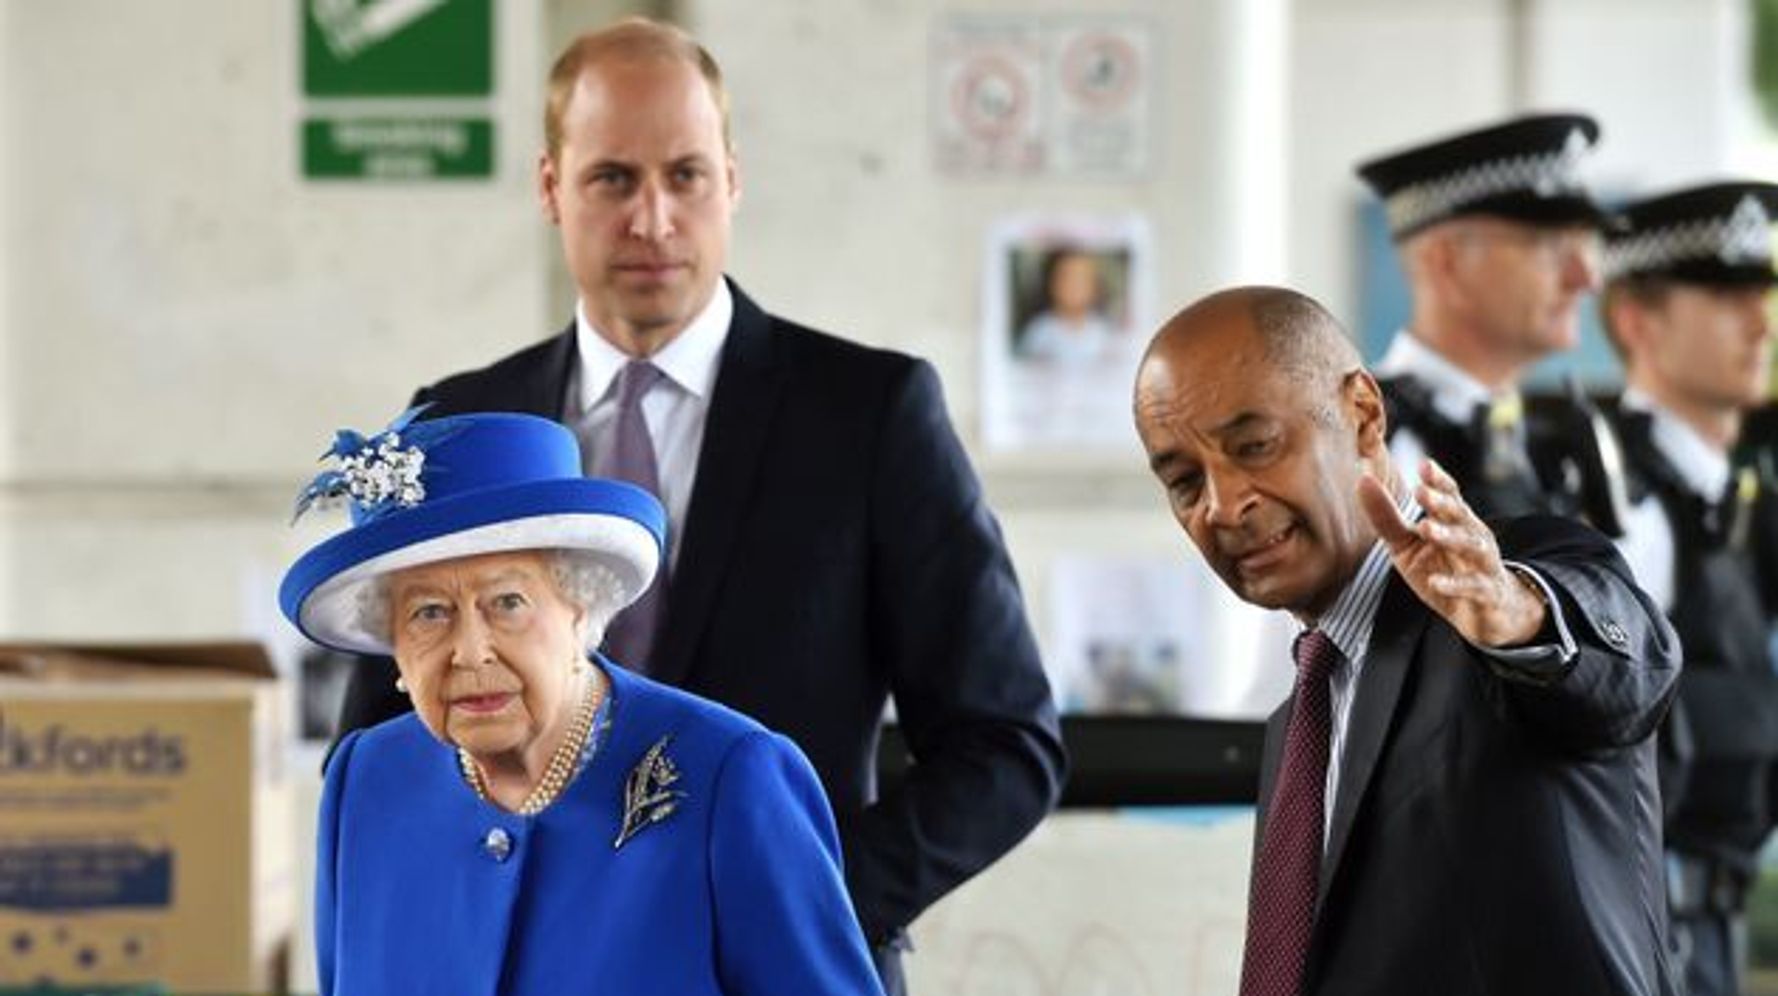 Queen Supports Black Lives Matter Movement, Says Royal Representative